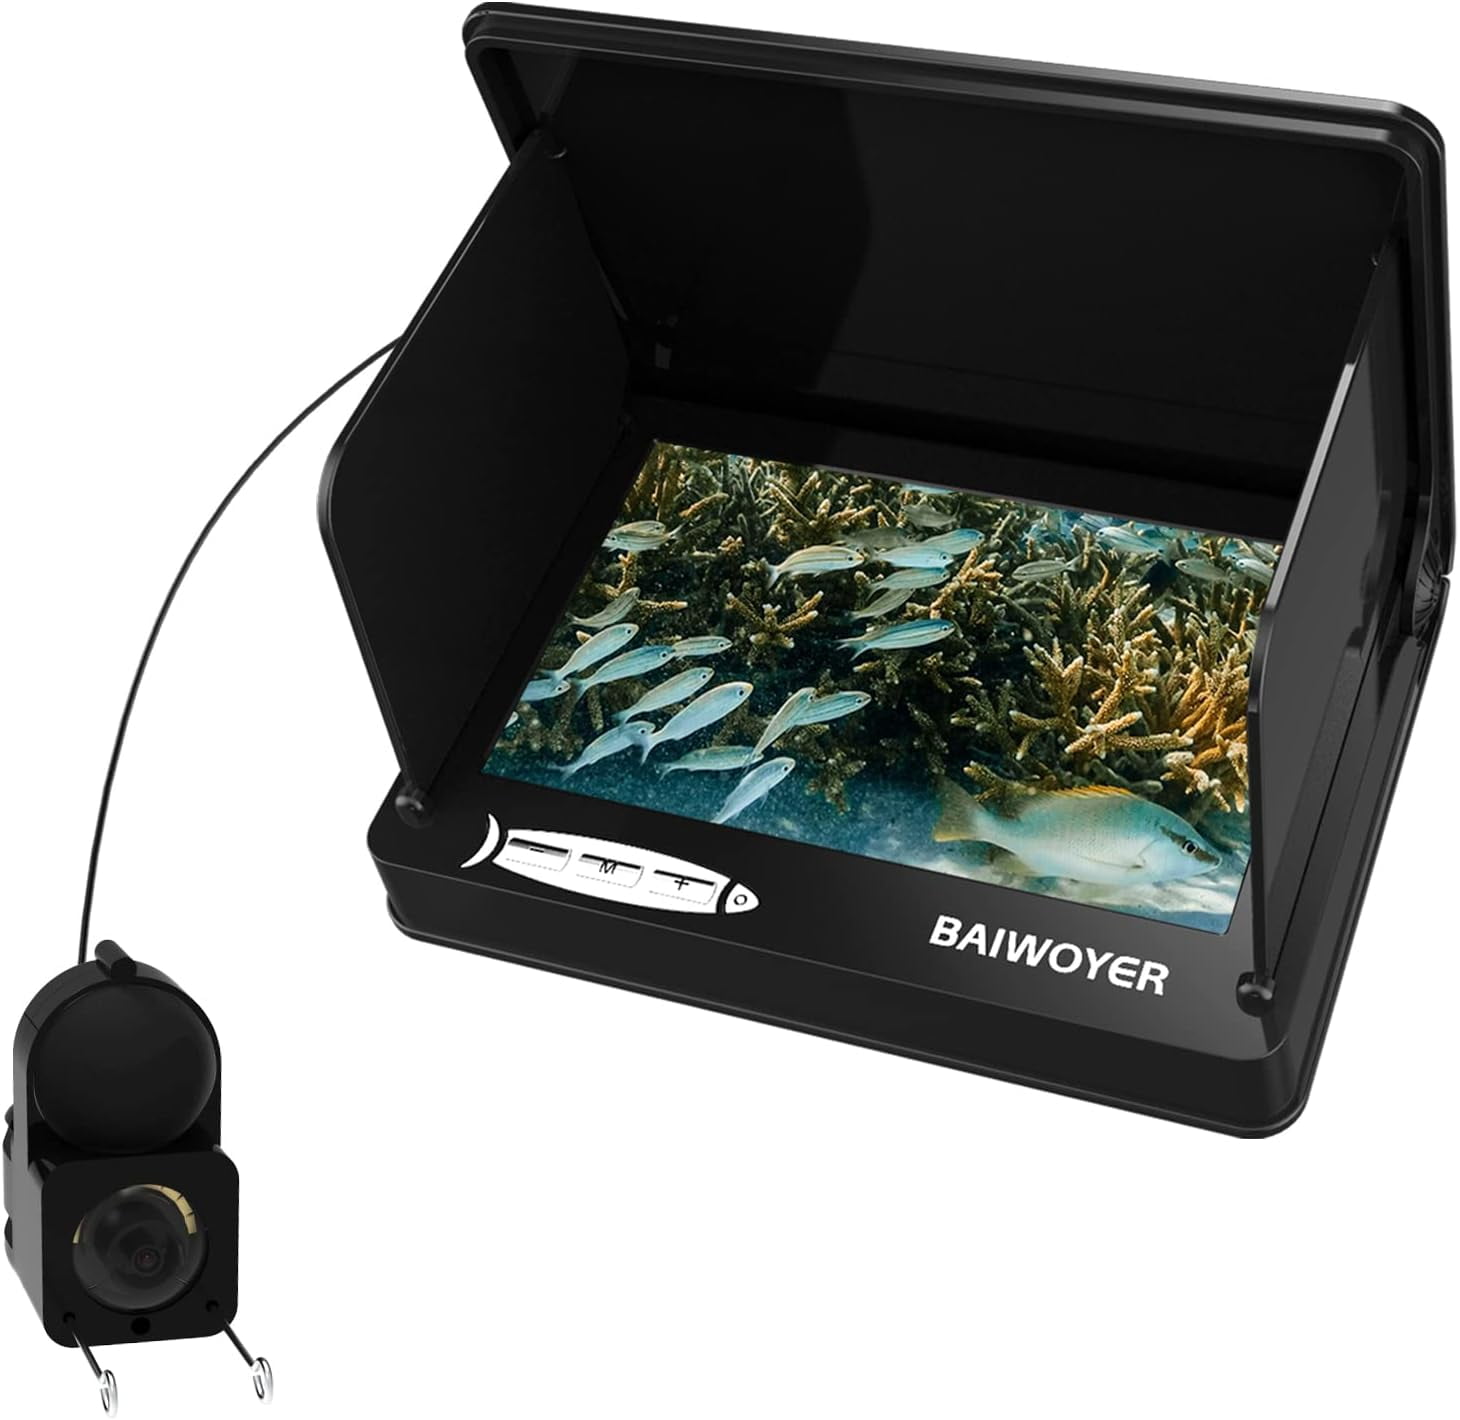 BAIWOYER Underwater Fishing Finder, Portable Fish Finder Camera